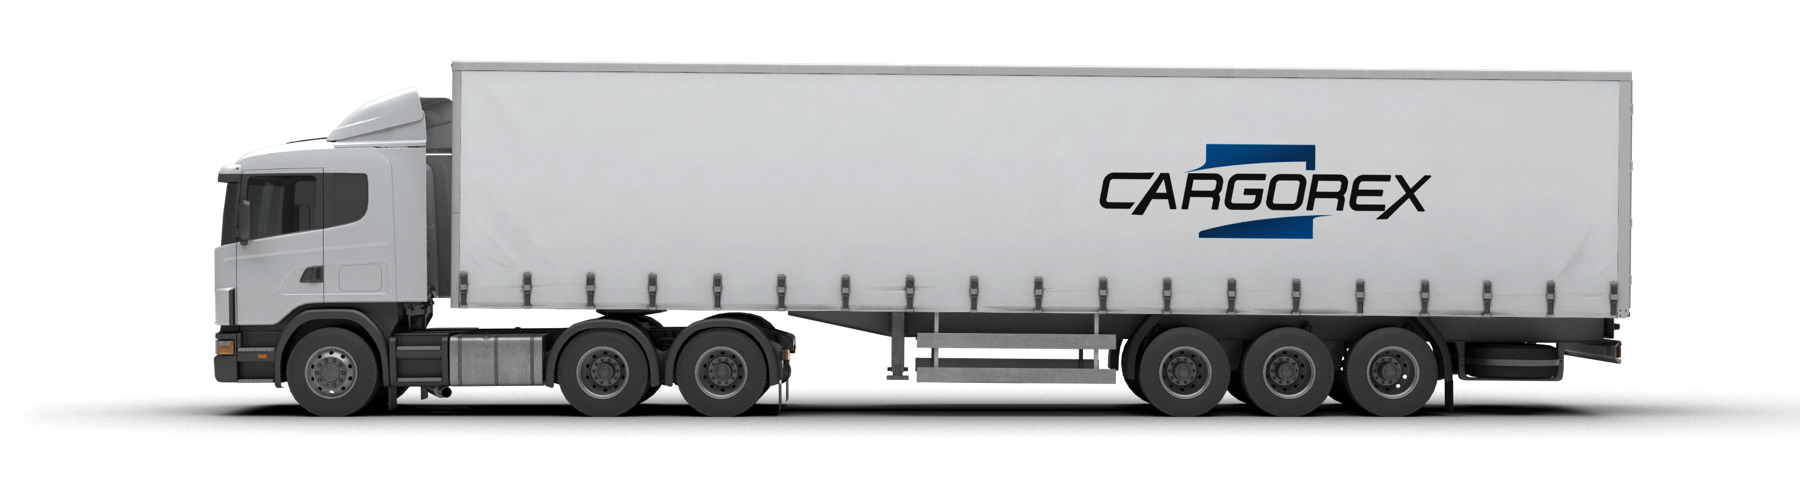 Cargorexpsd online - West Sussex Freight Services